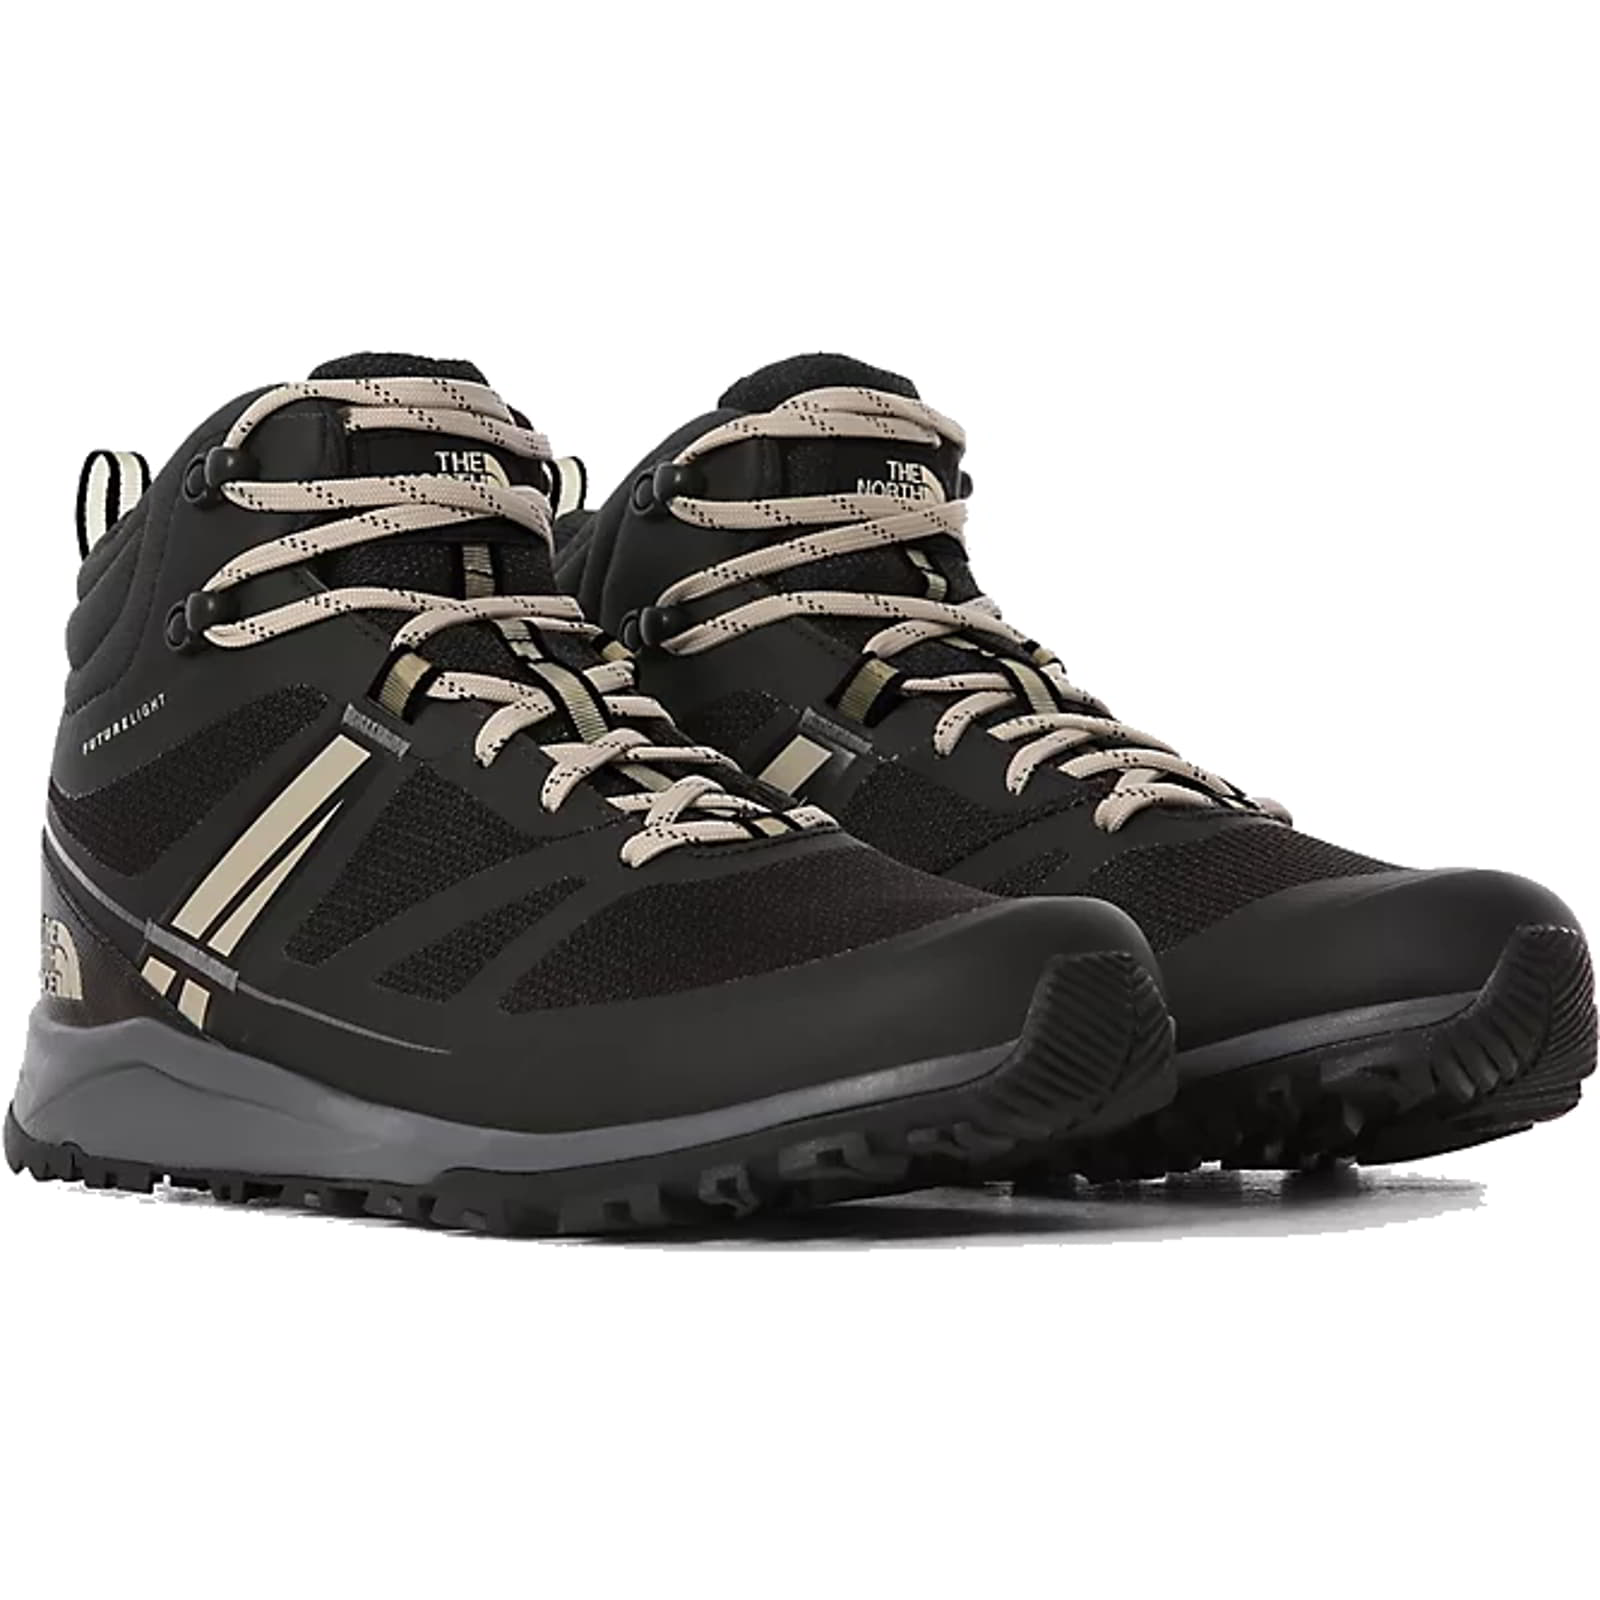 North Face Men's Litewave Mid Futurelight Waterproof Walking Ankle Boots - UK 10.5 / US 11.5